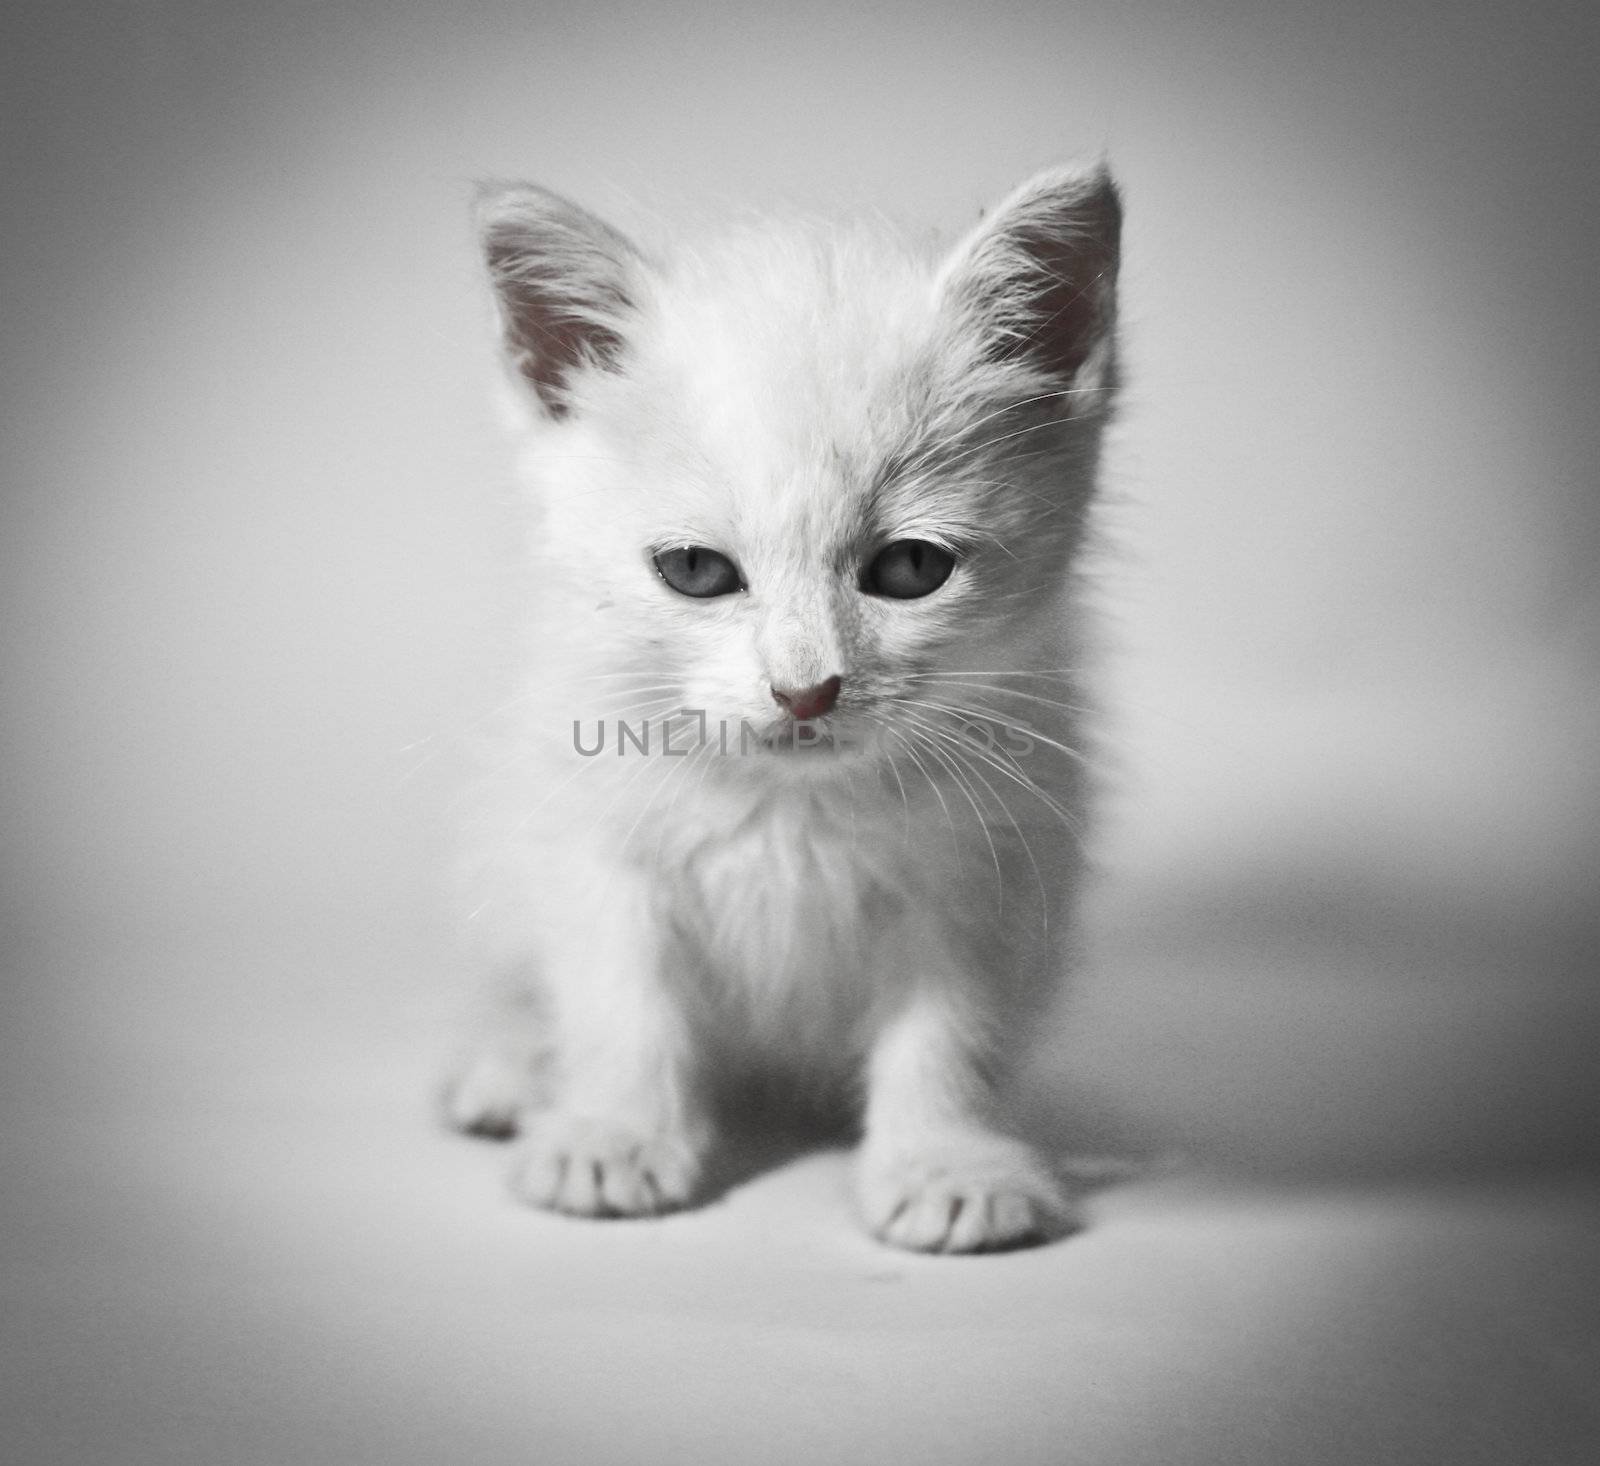  siberian kitten on white background  by schankz